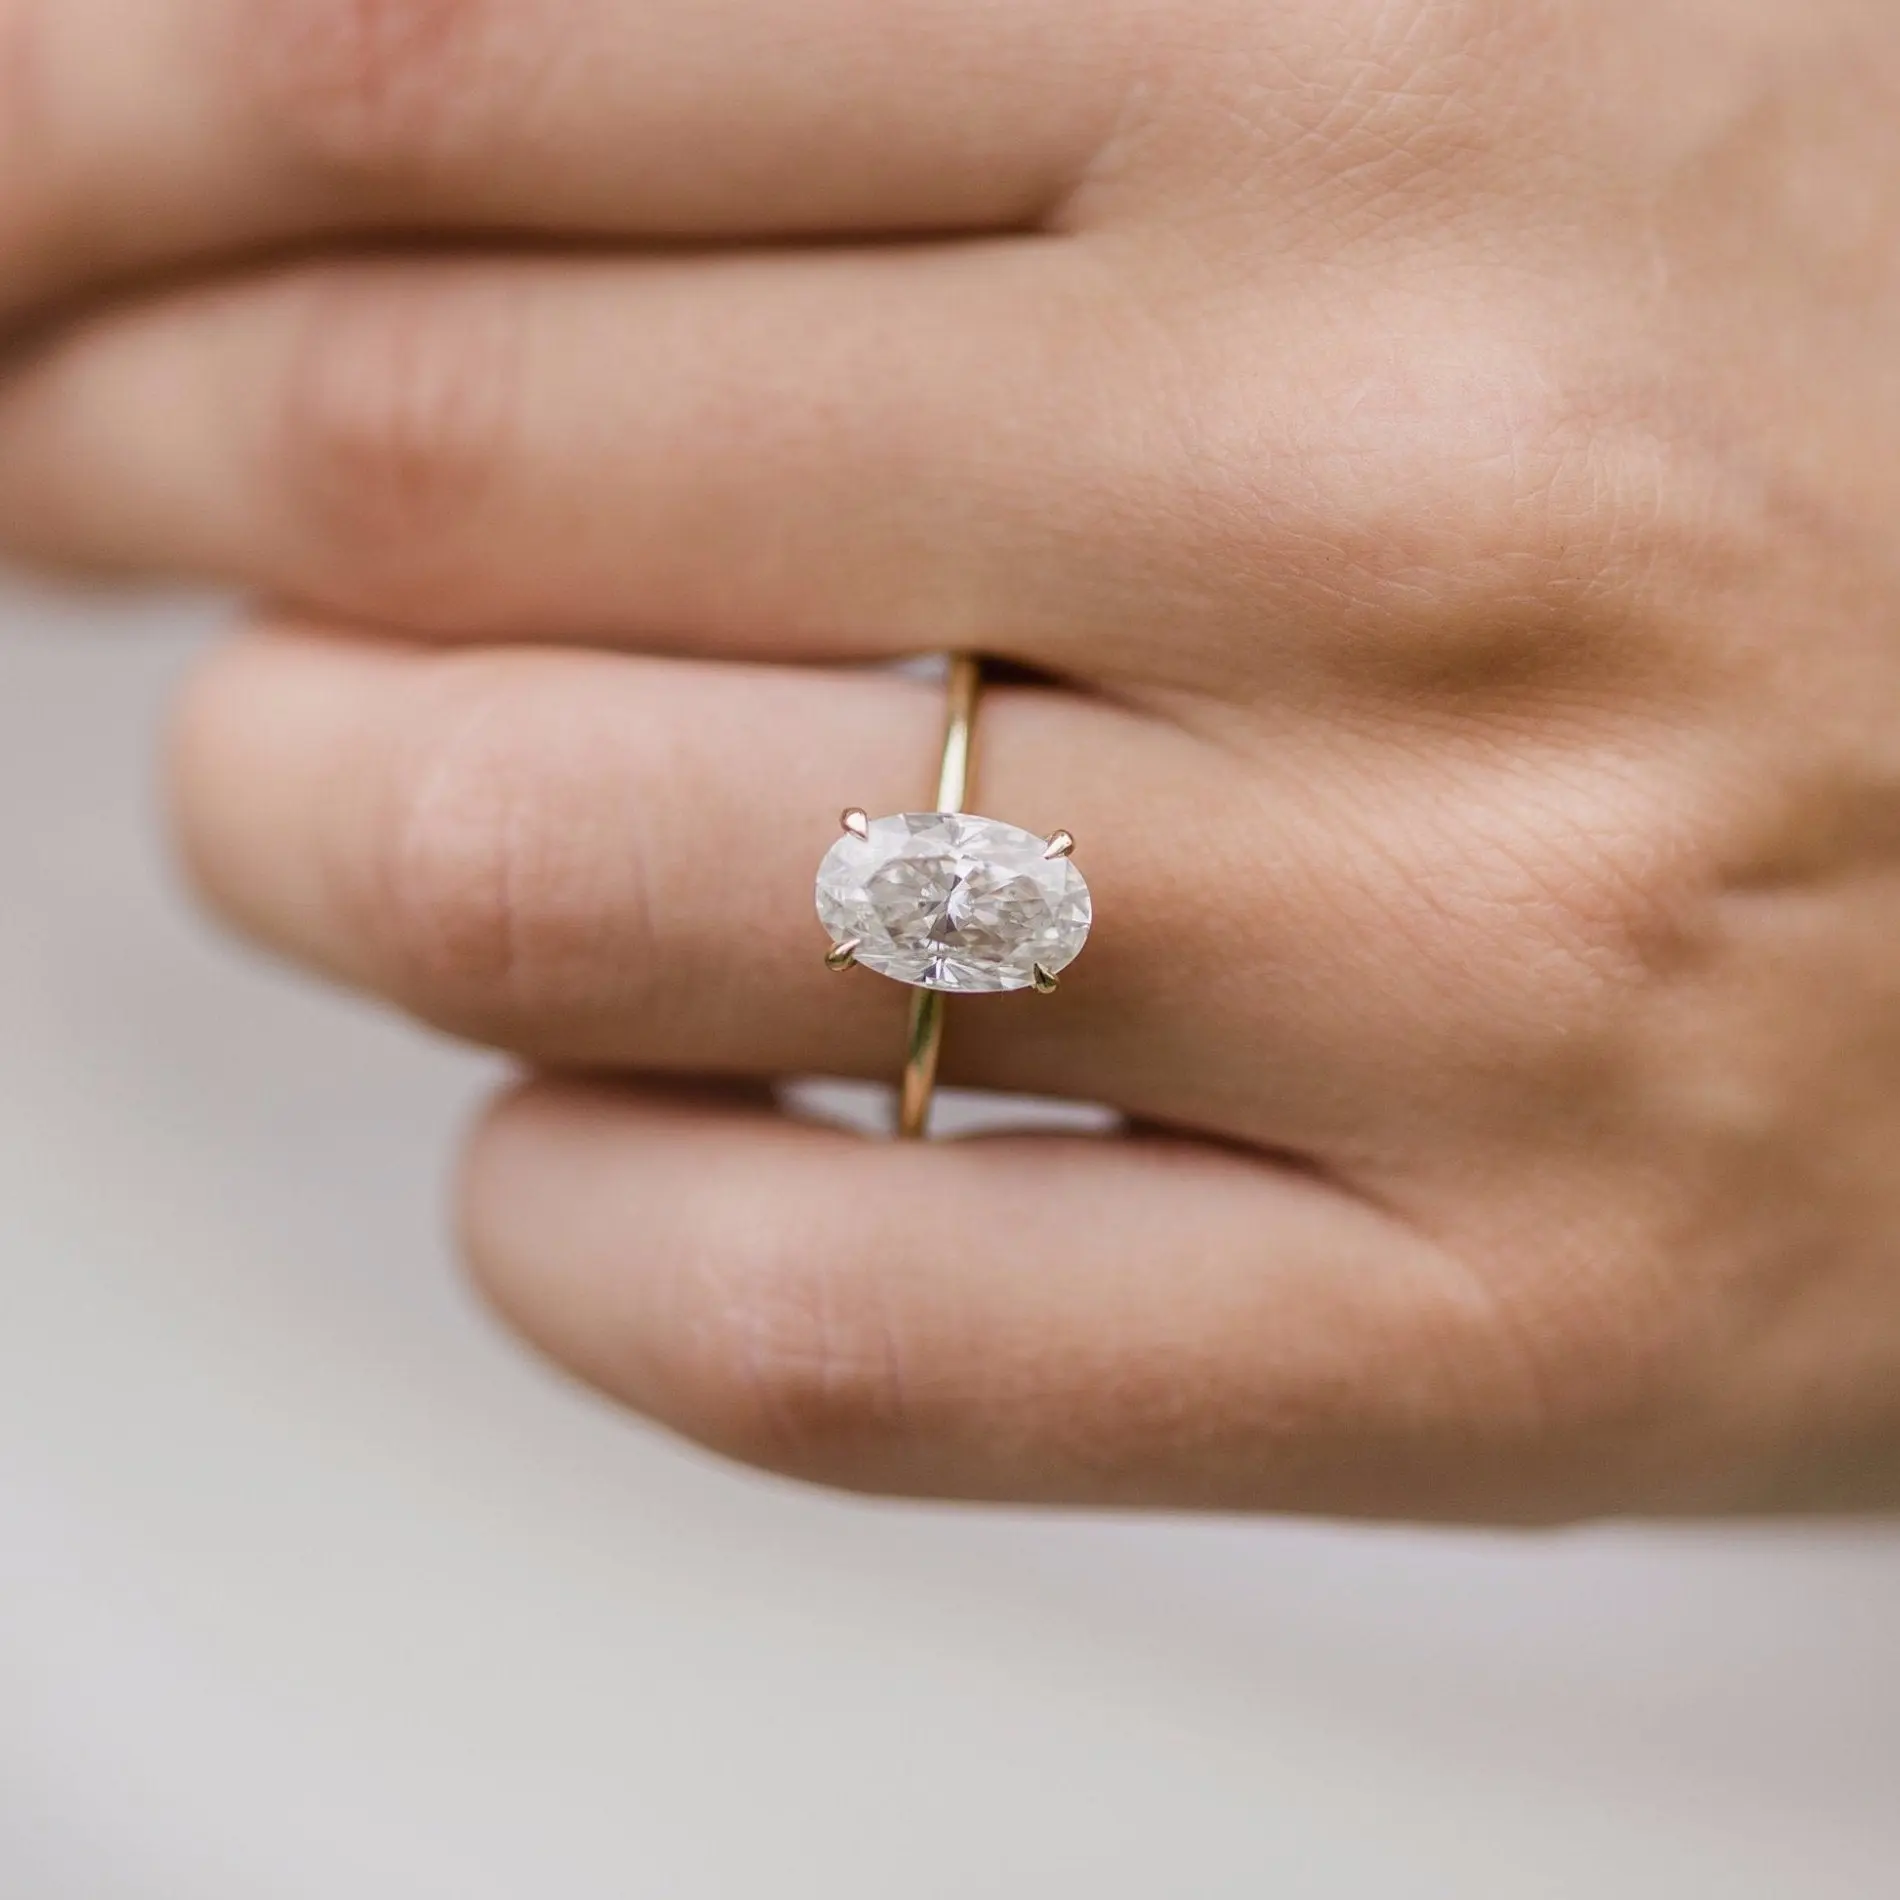 Hailer big size 3carat diamond ring lab grown high quality clear 18k diamond wedding ring